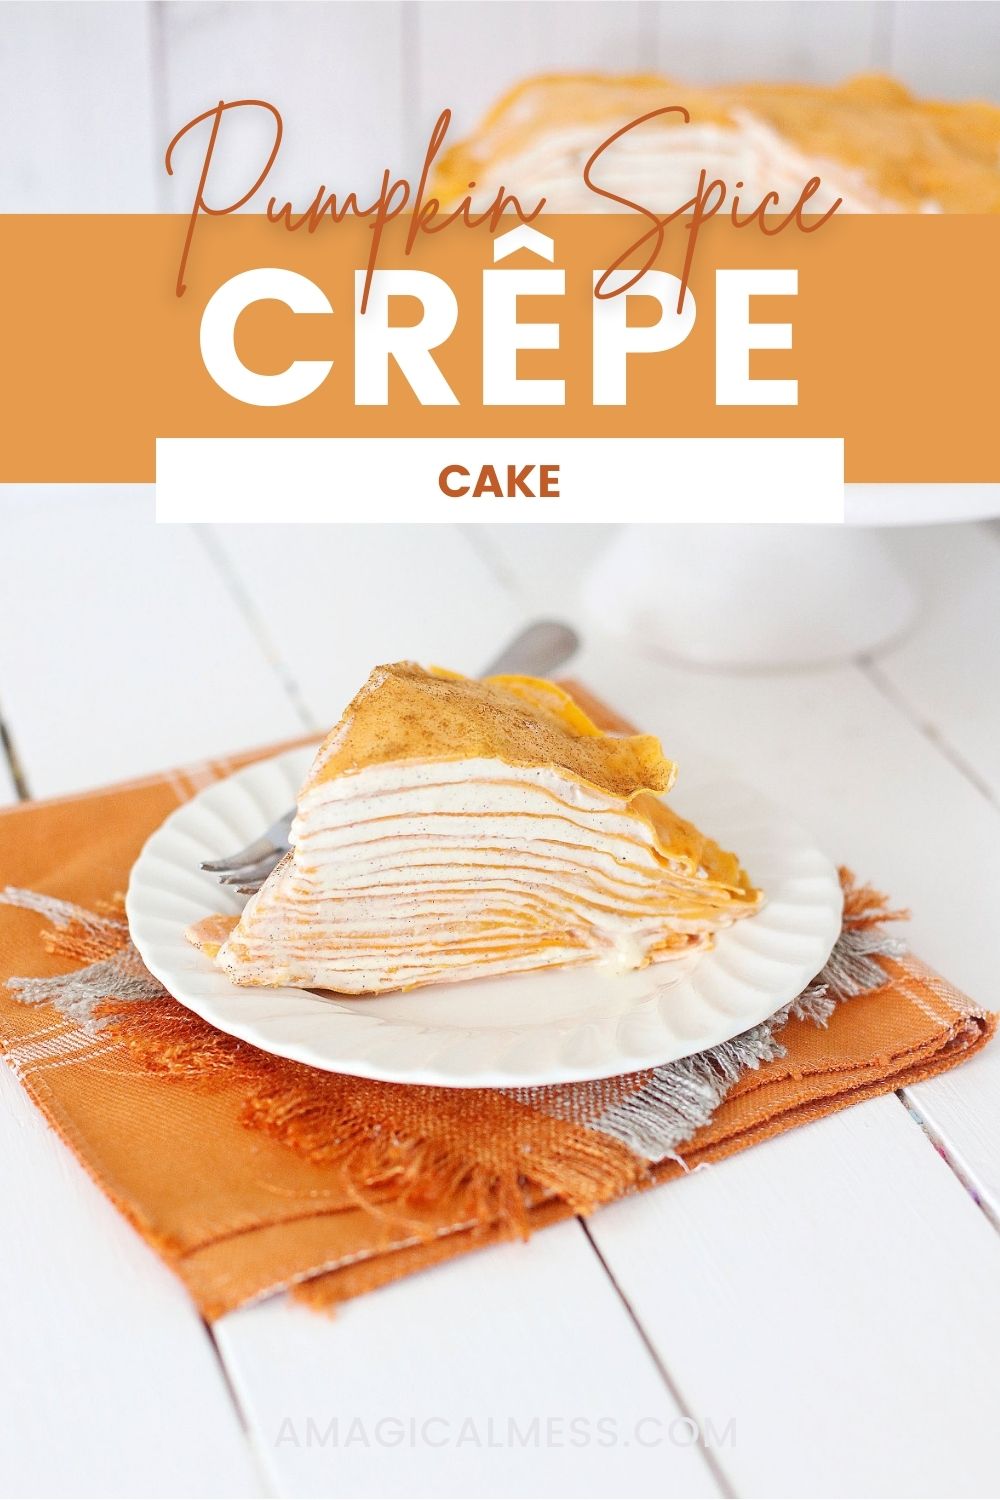 Pumpkin crepe cake on a plate and an orange napkin.